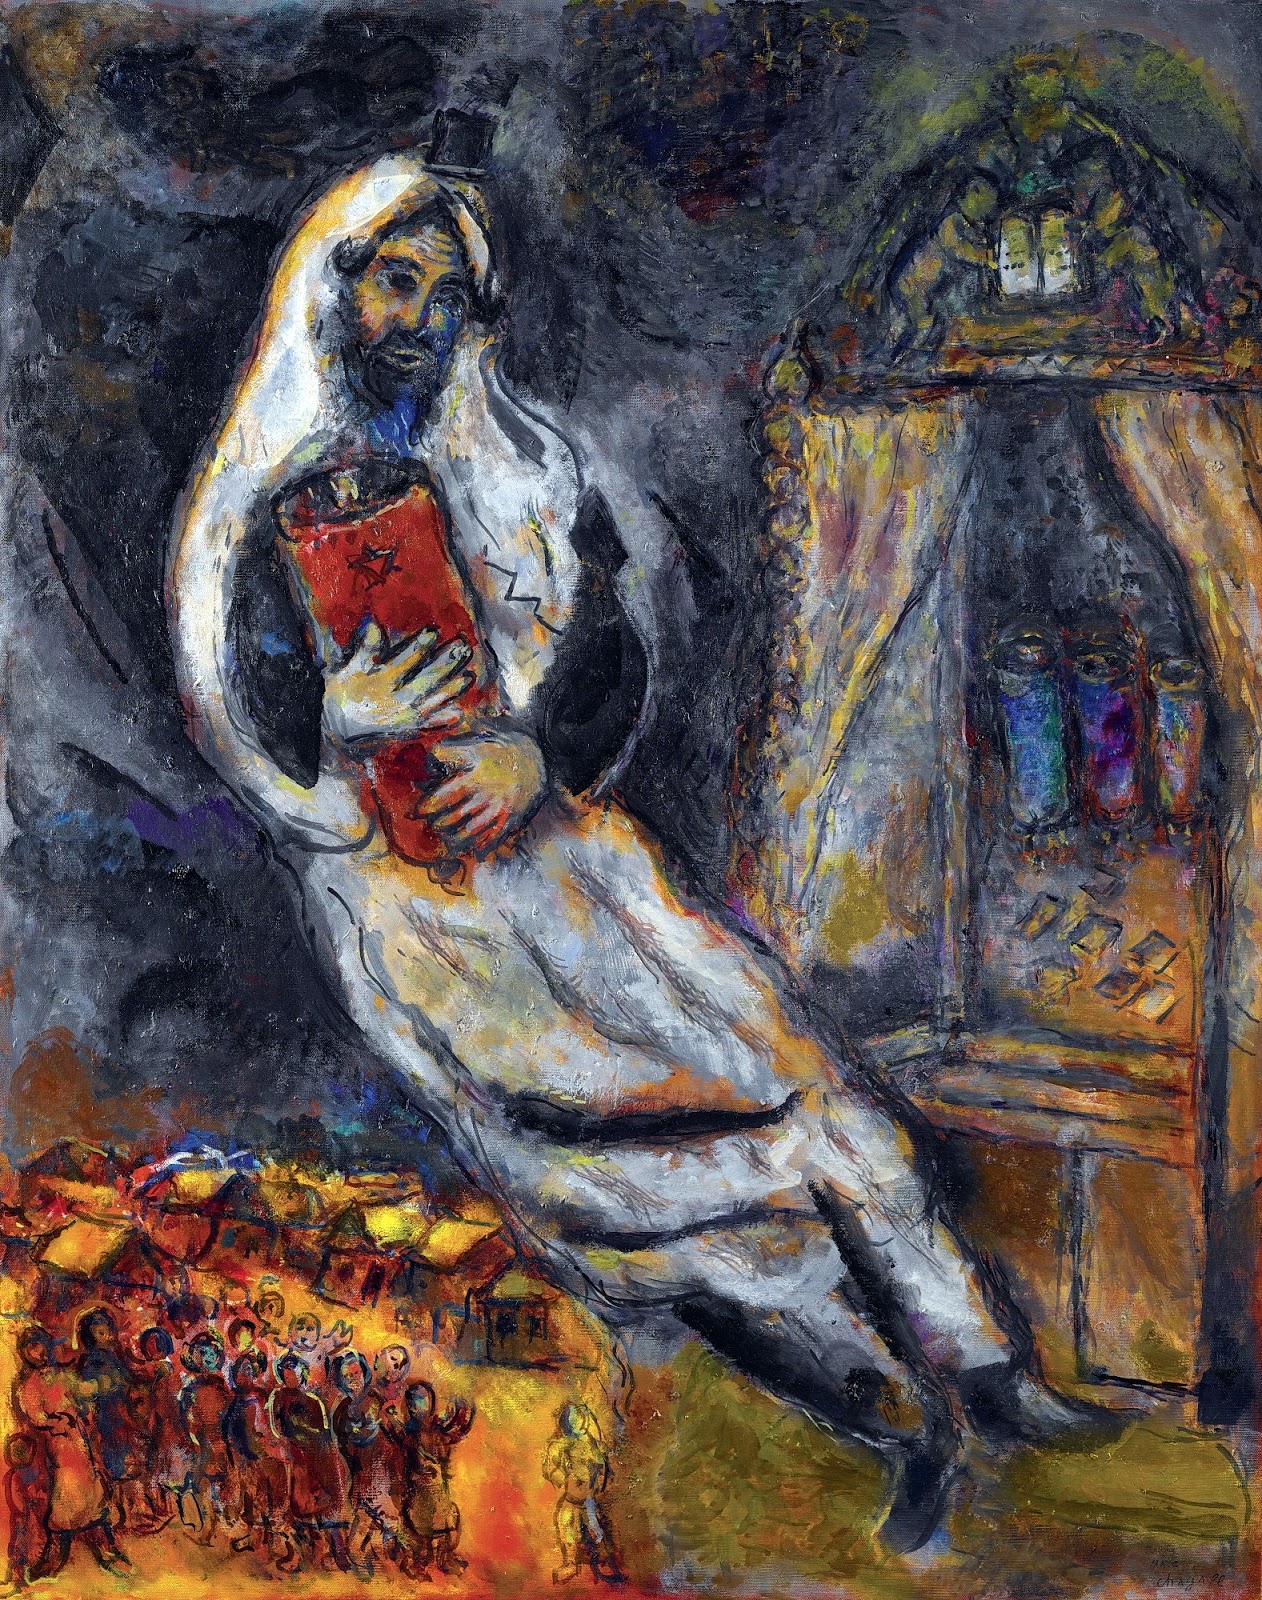 Marc+Chagall-1887-1985 (244).jpg